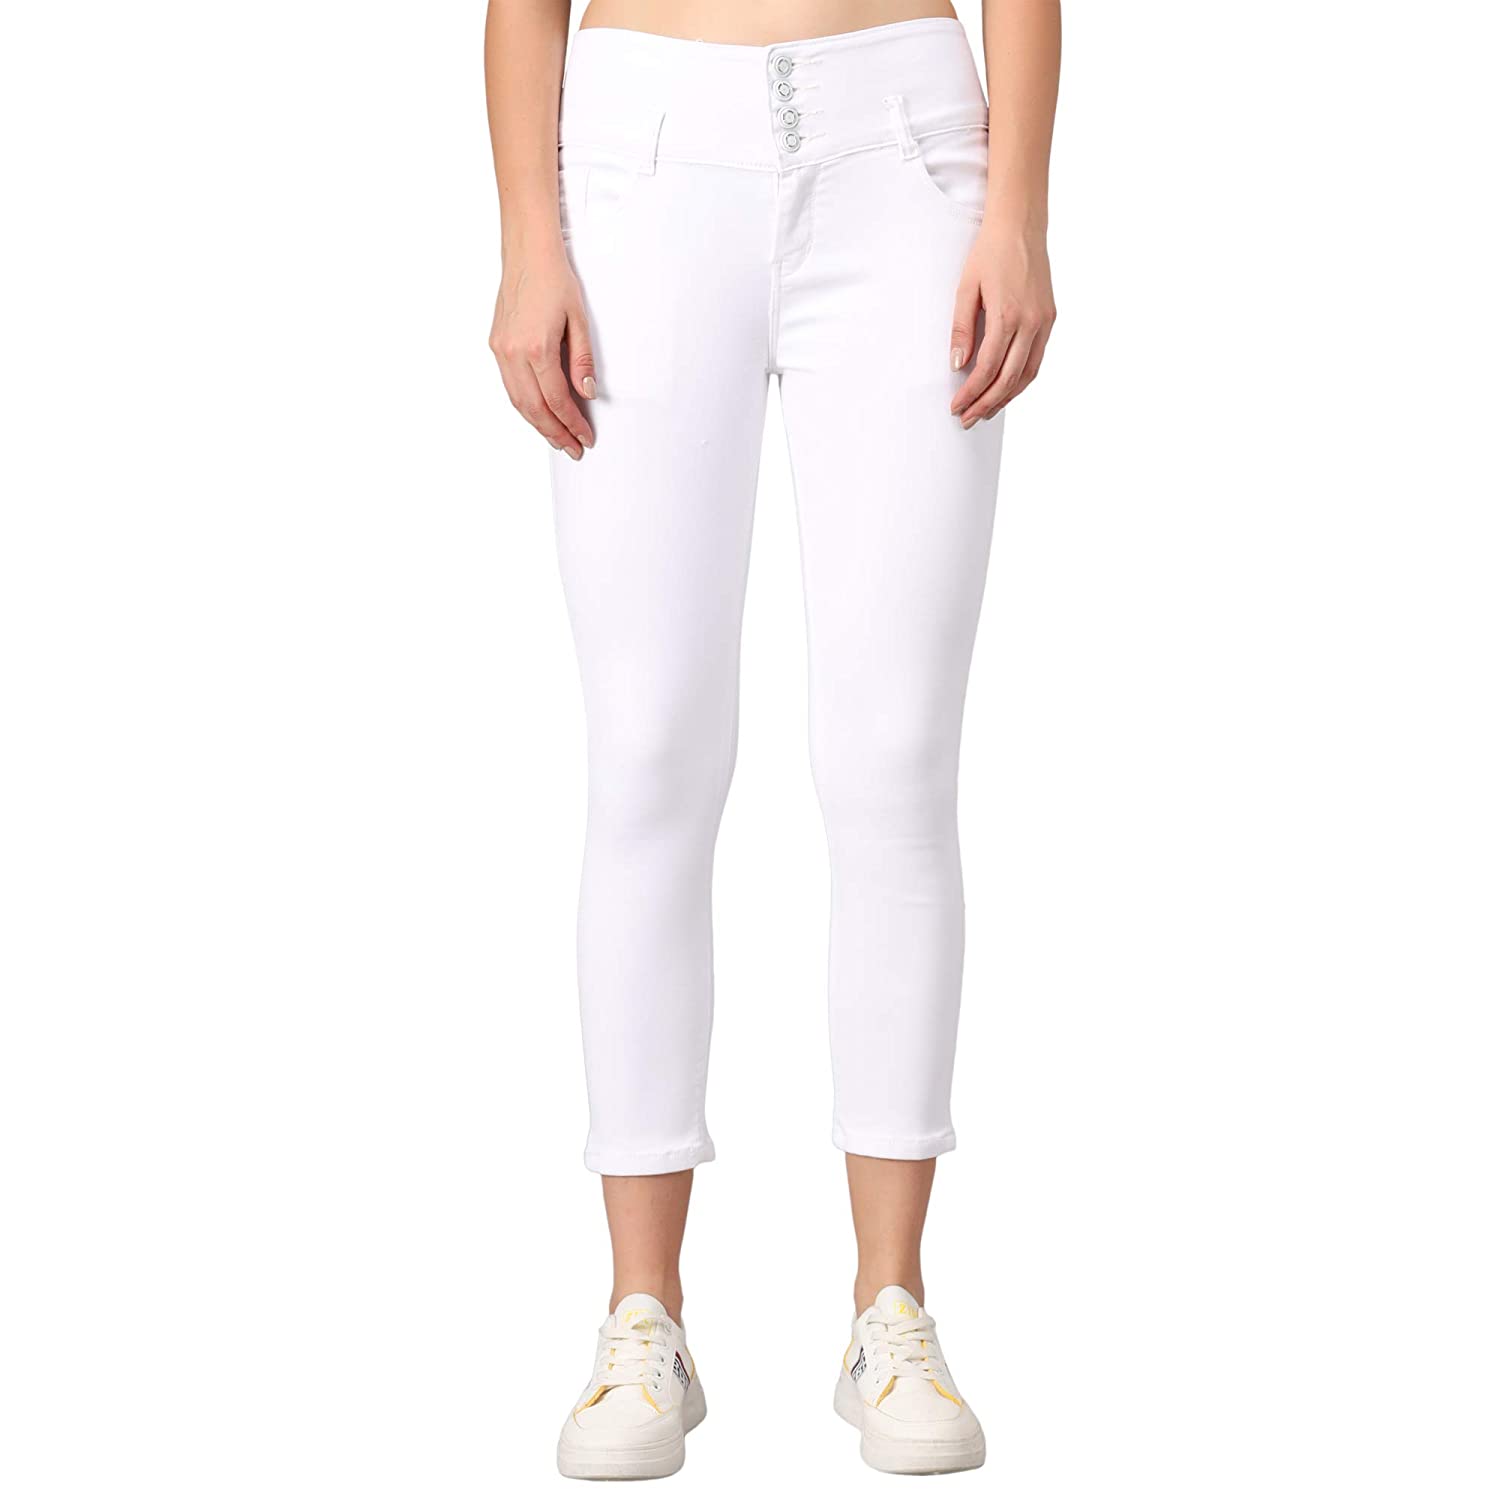 Asos Brand Slim Fit Suit Cropped Suit Pants In 100% Linen, $72 | Asos |  Lookastic